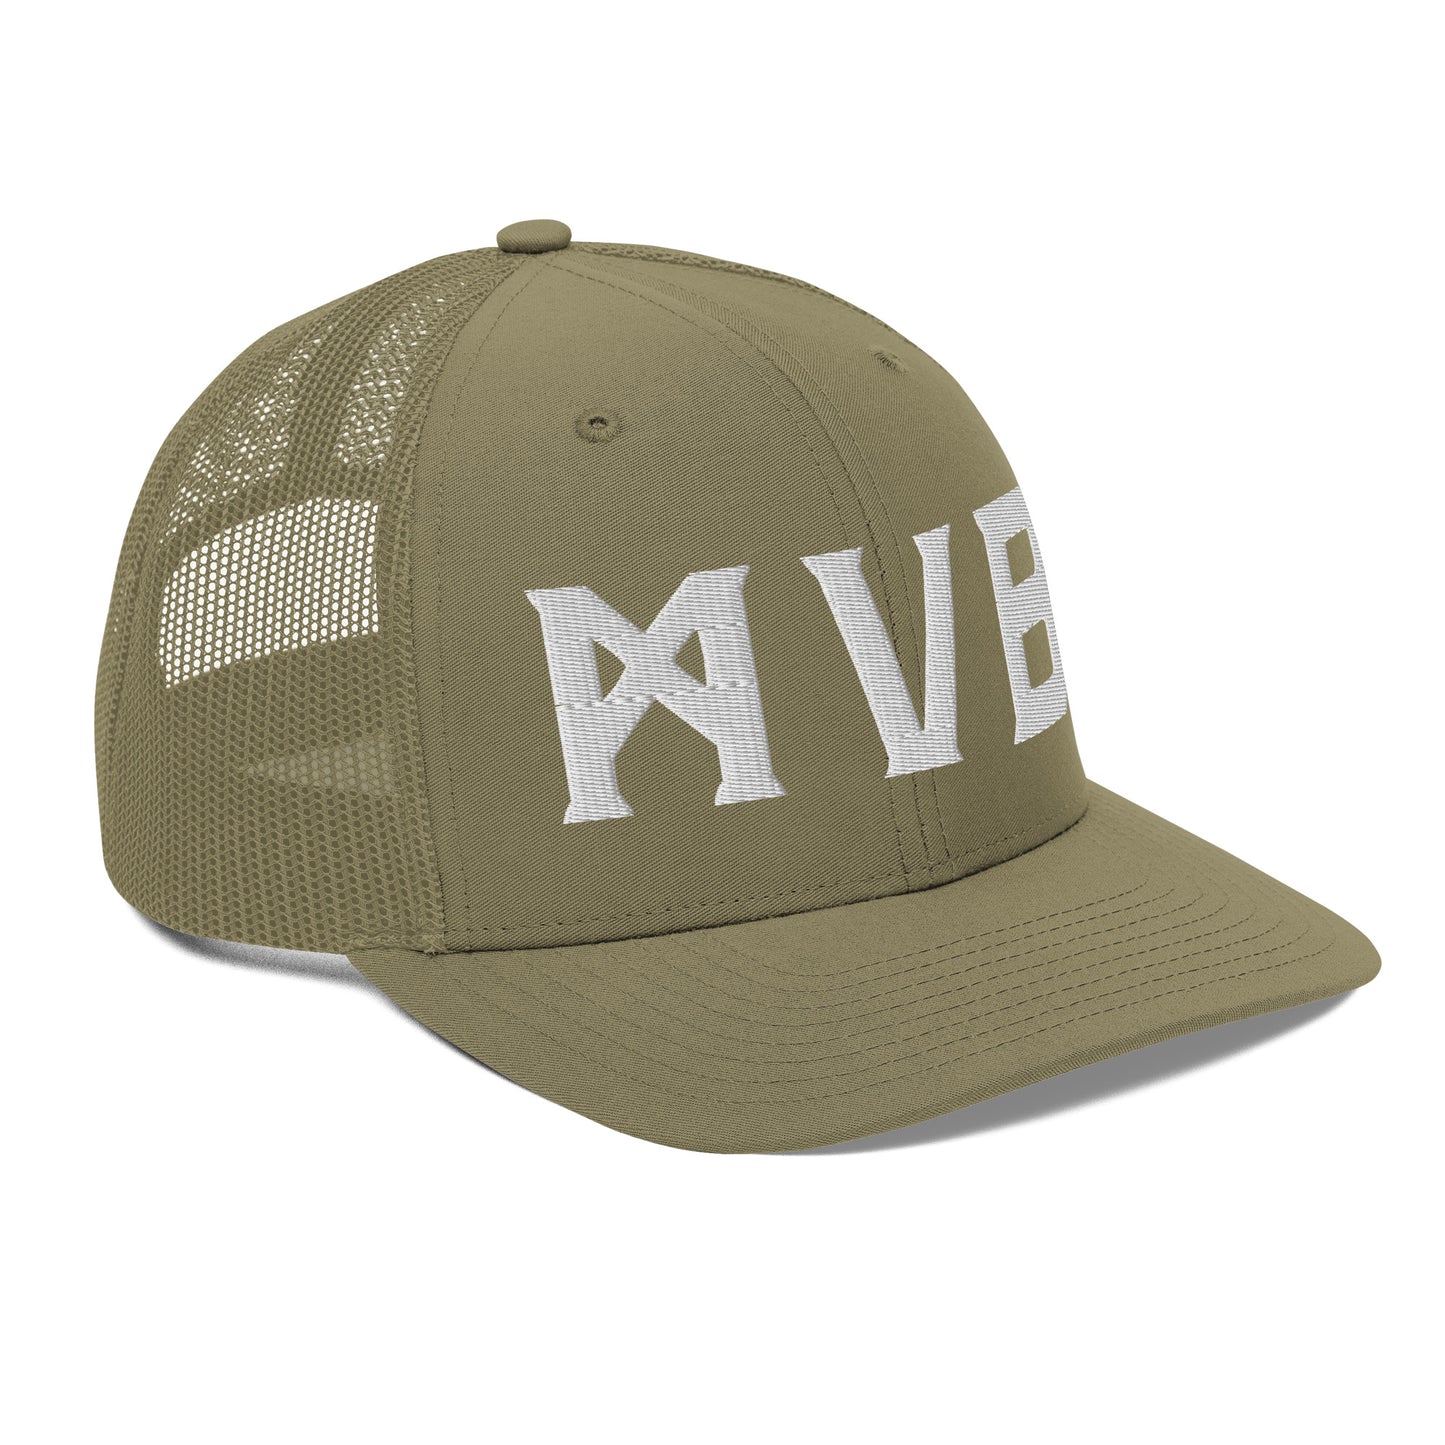 MVB Trucker Cap